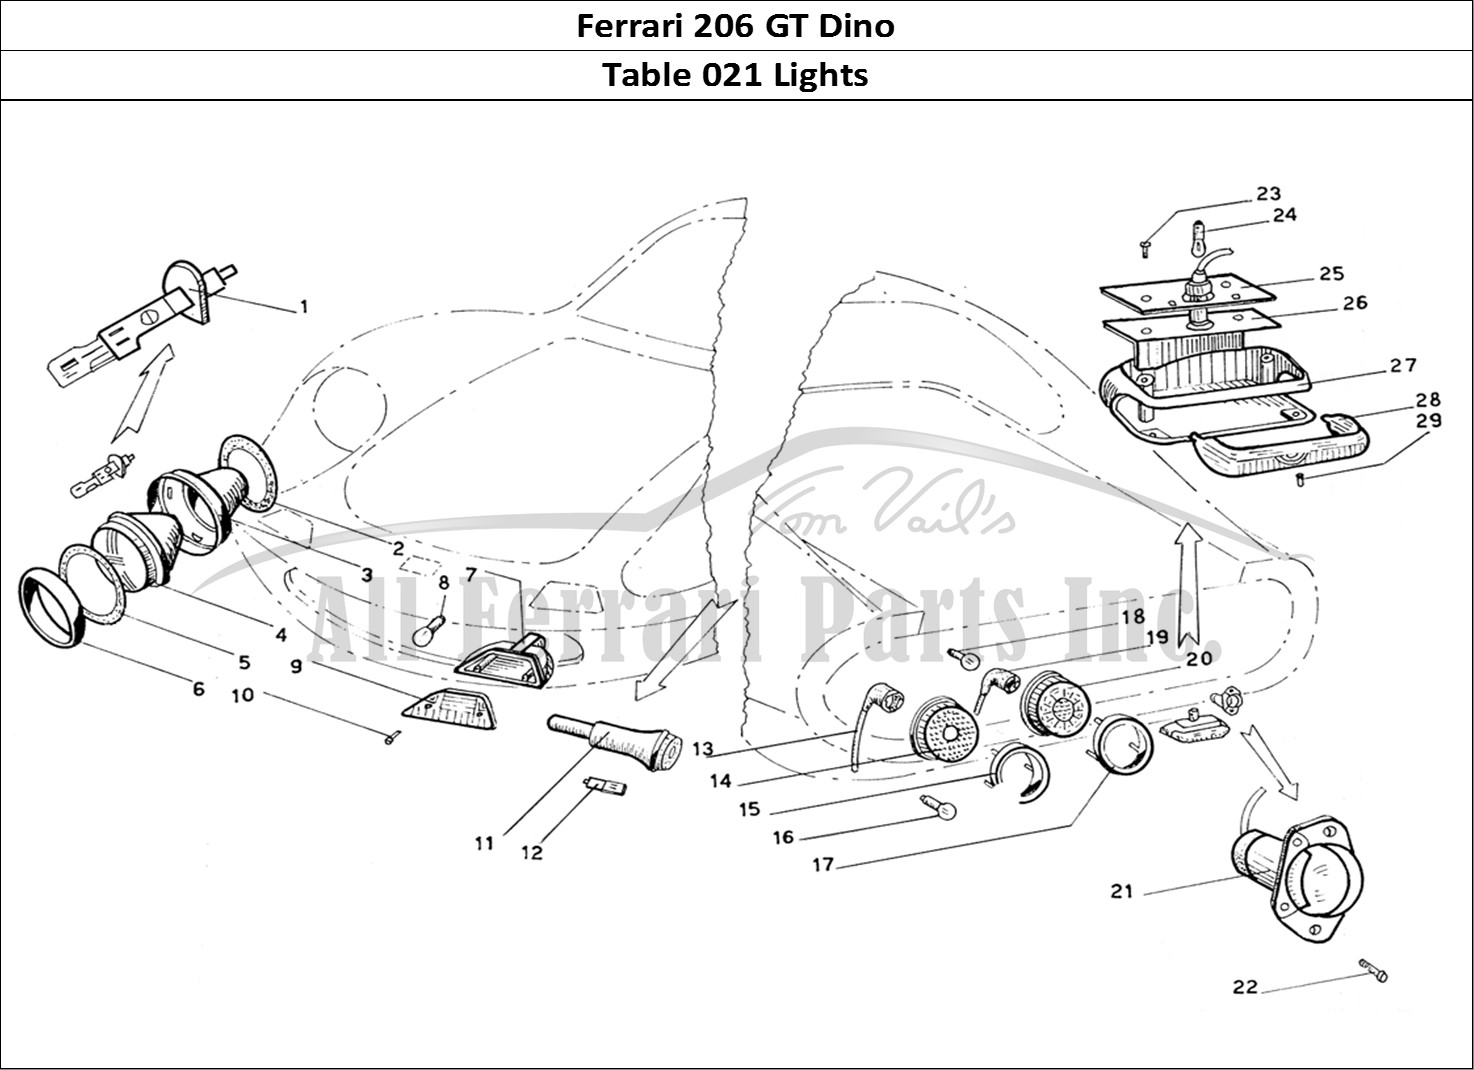 Ferrari Parts Ferrari 206 GT Dino (Coachwork) Page 021 Front & Rear Lights